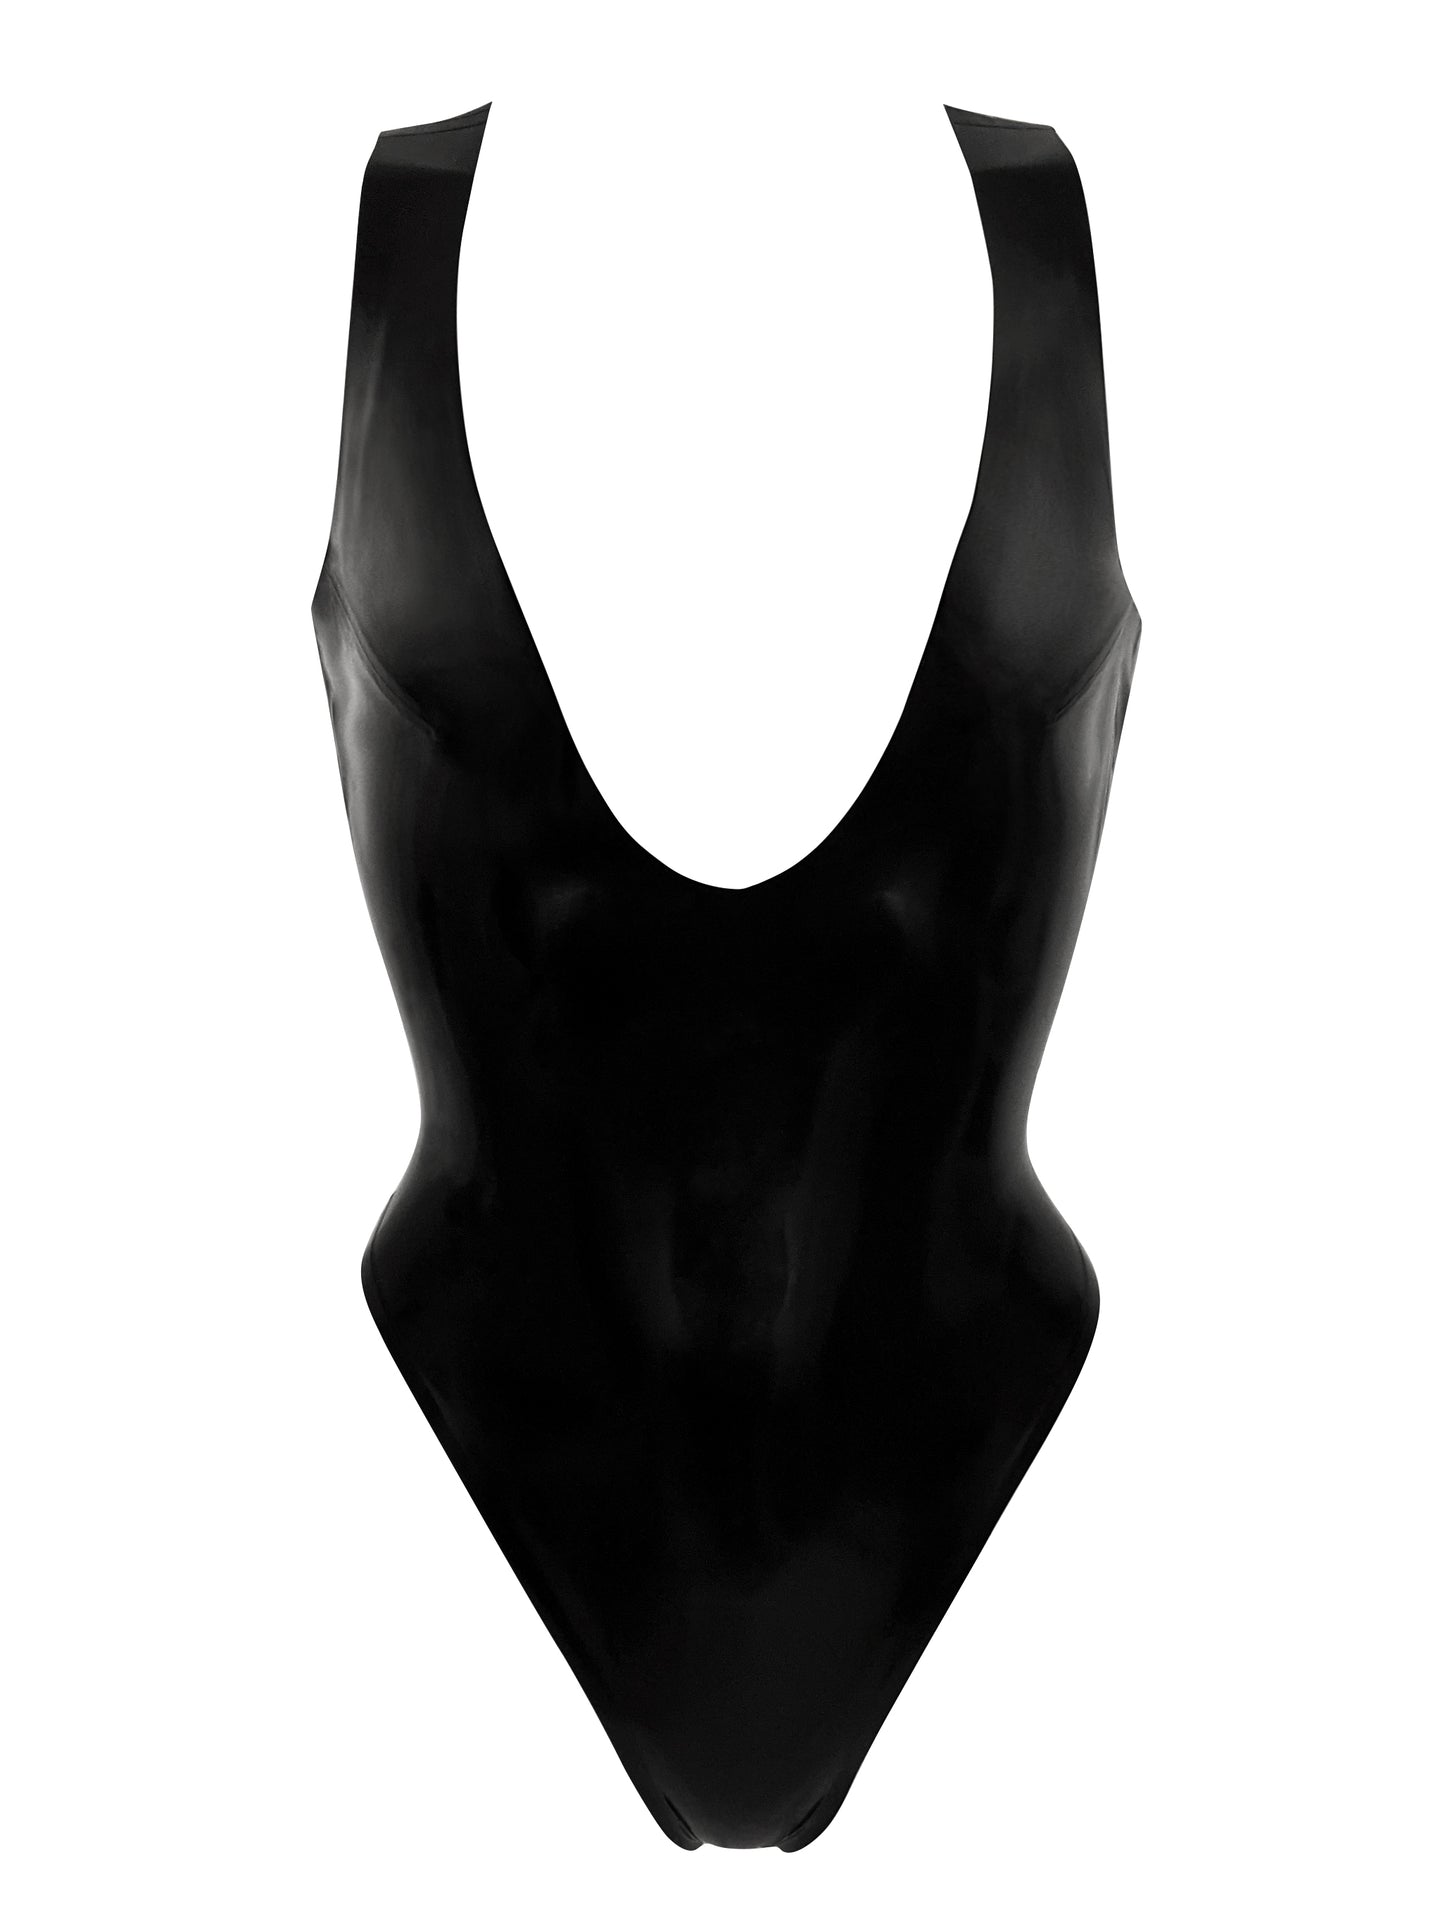 Black Latex Thong Bodysuit - READY TO SHIP